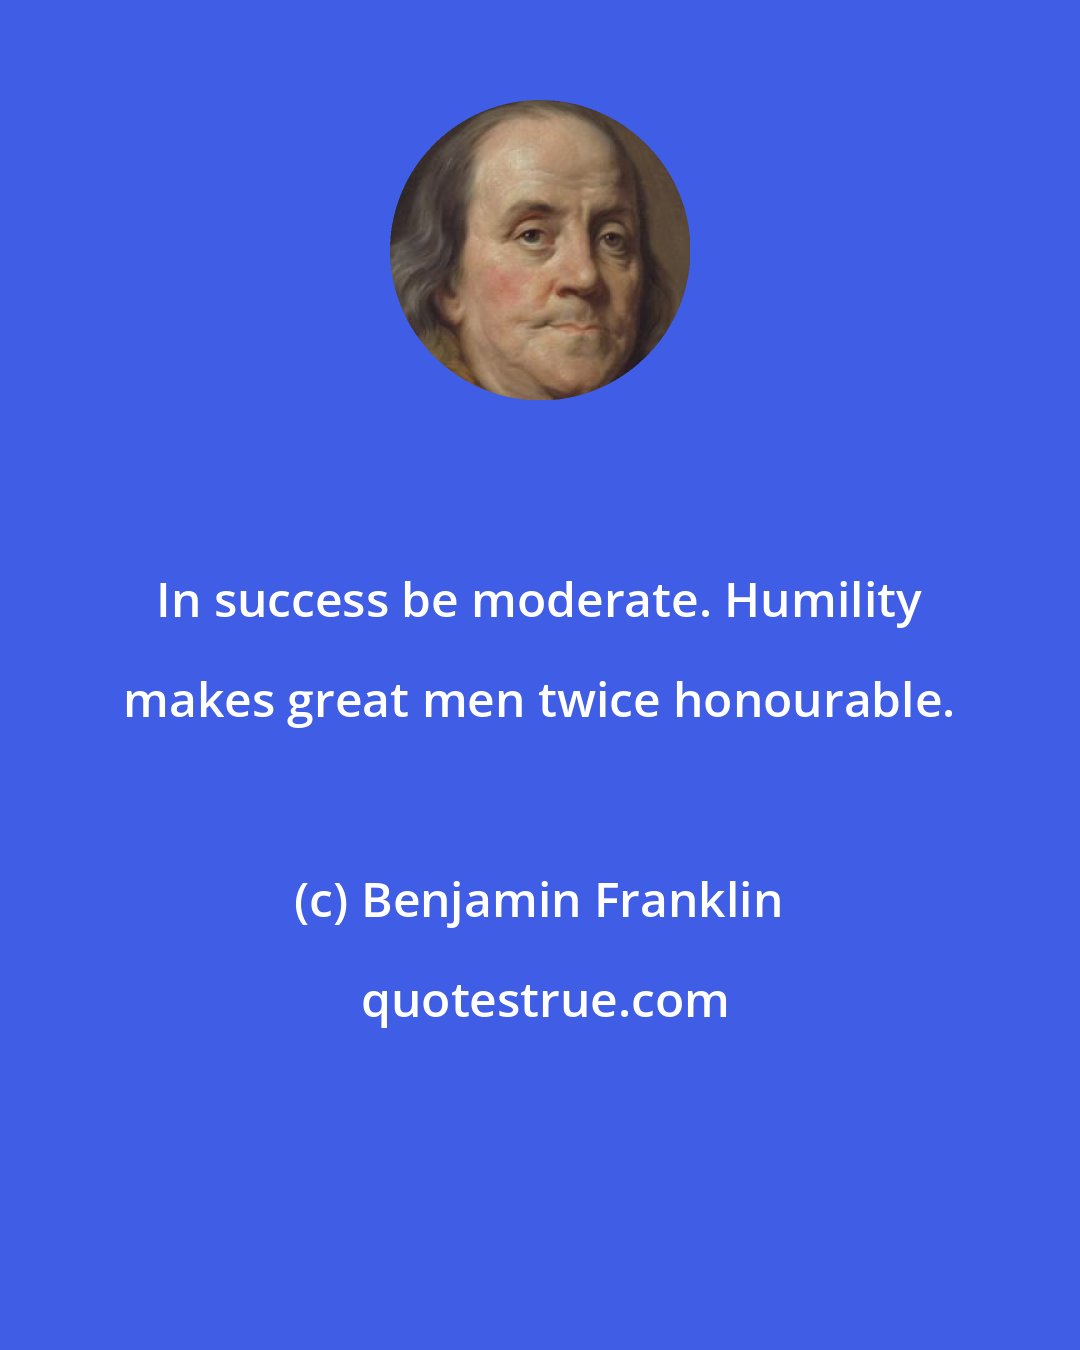 Benjamin Franklin: In success be moderate. Humility makes great men twice honourable.